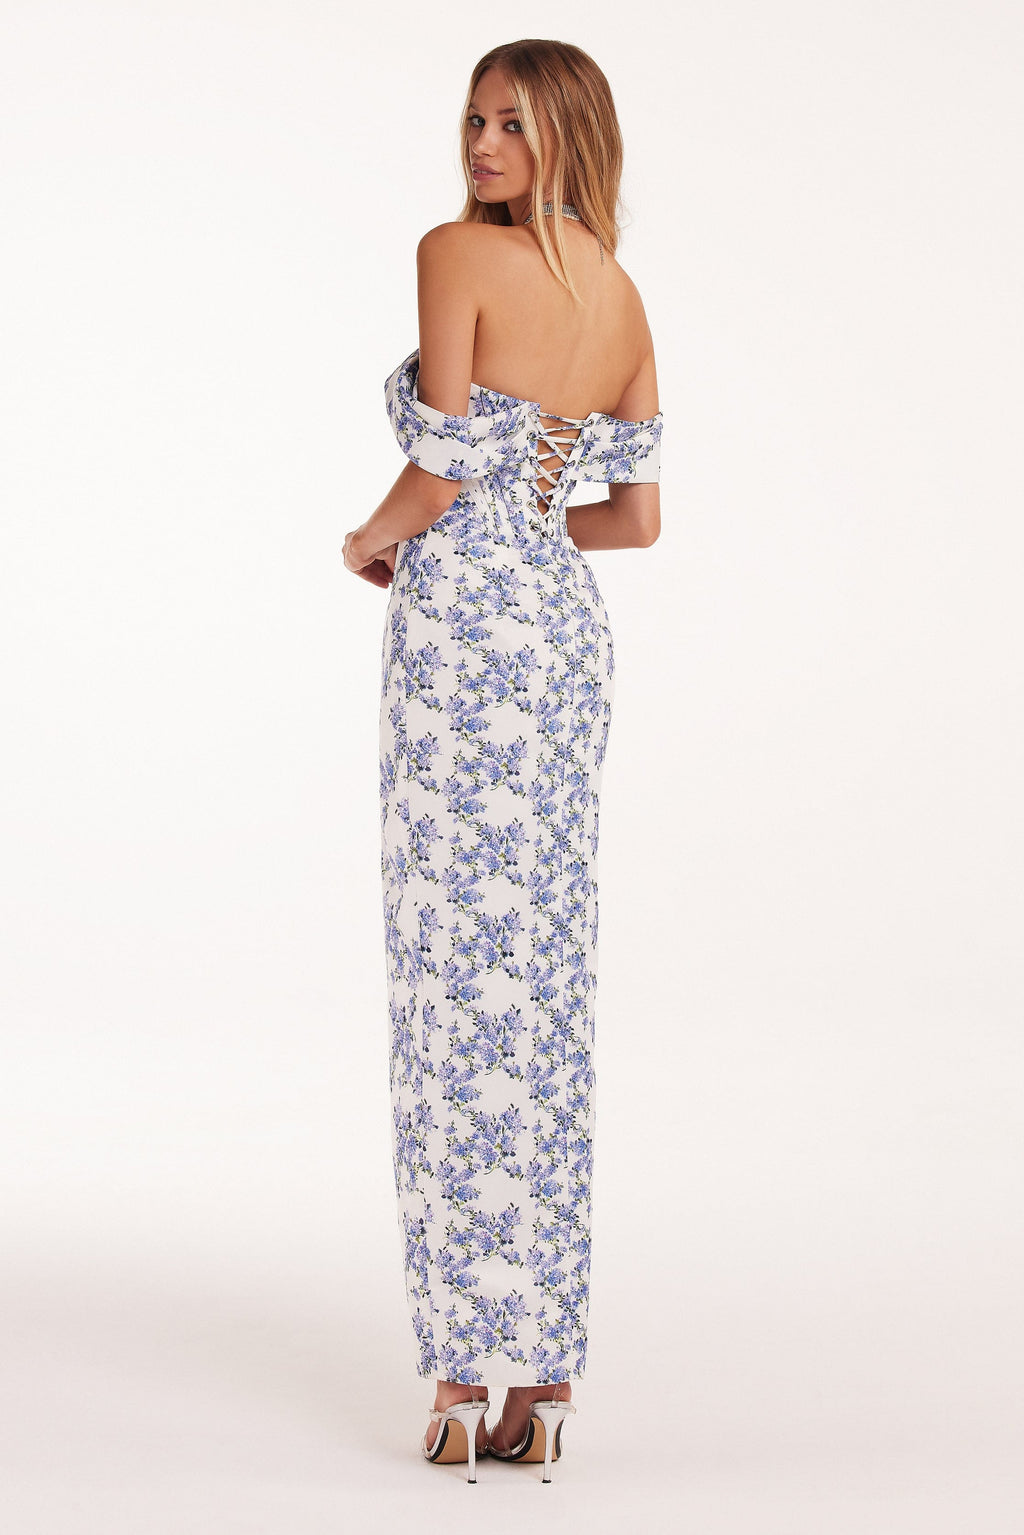 Blue Hydrangea off-shoulder satin dress